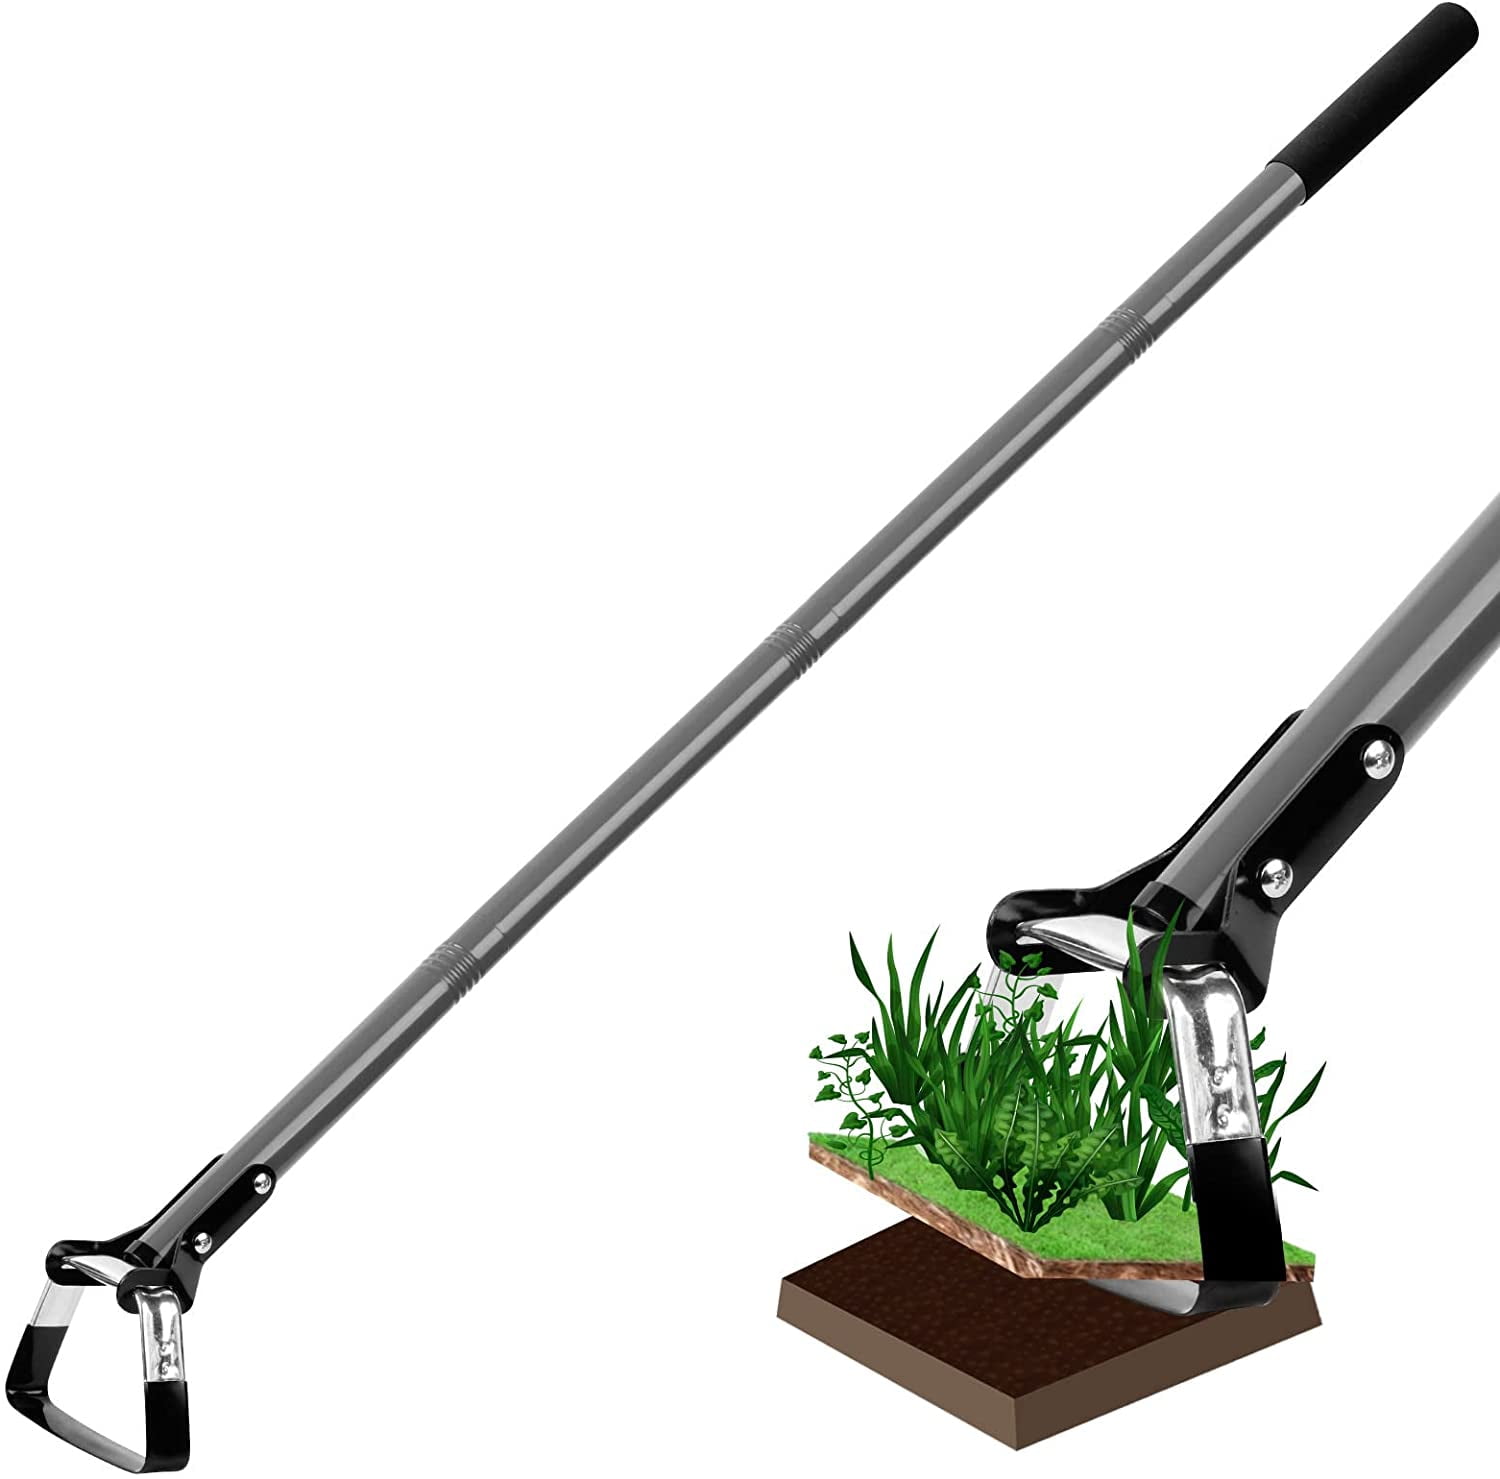 Walensee Action Stirrup Hoe for Weeding, Adjustable 56 inch Steel Hula ...